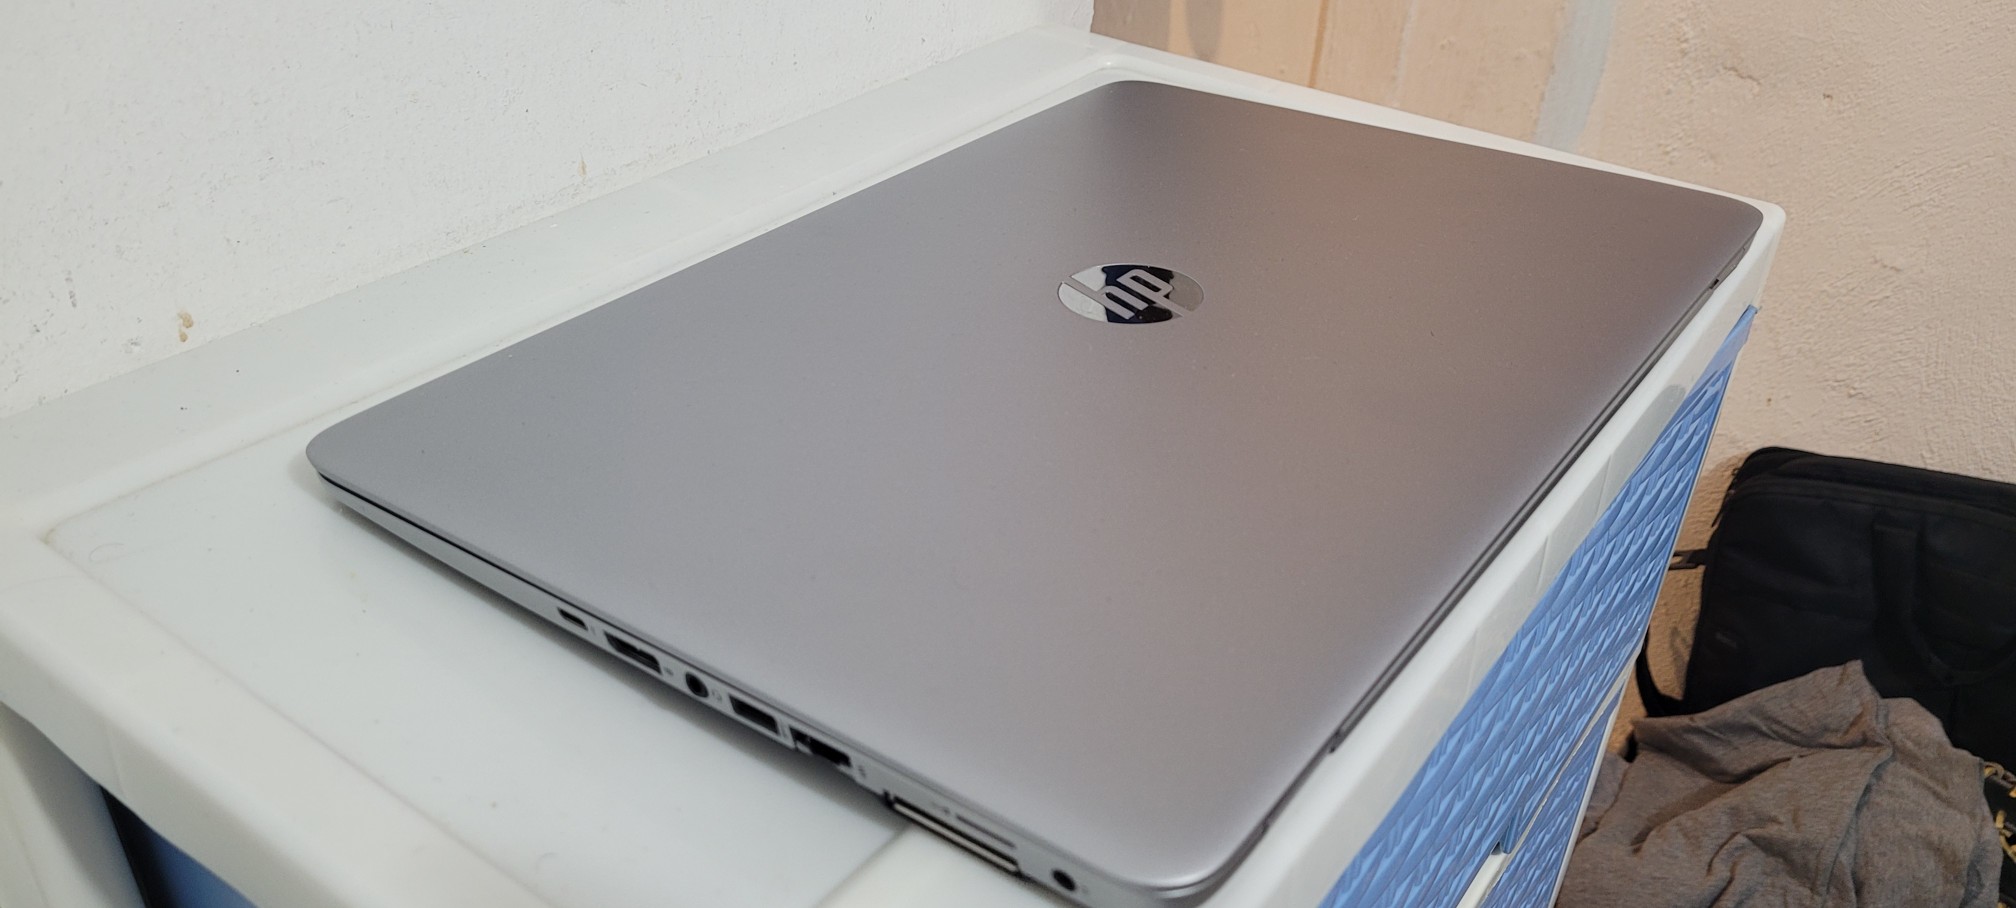 laptop hp Slim 14 Pulg Core i5 6ta Gen Ram 8gb dd4 Disco 500gb SSD  New 2